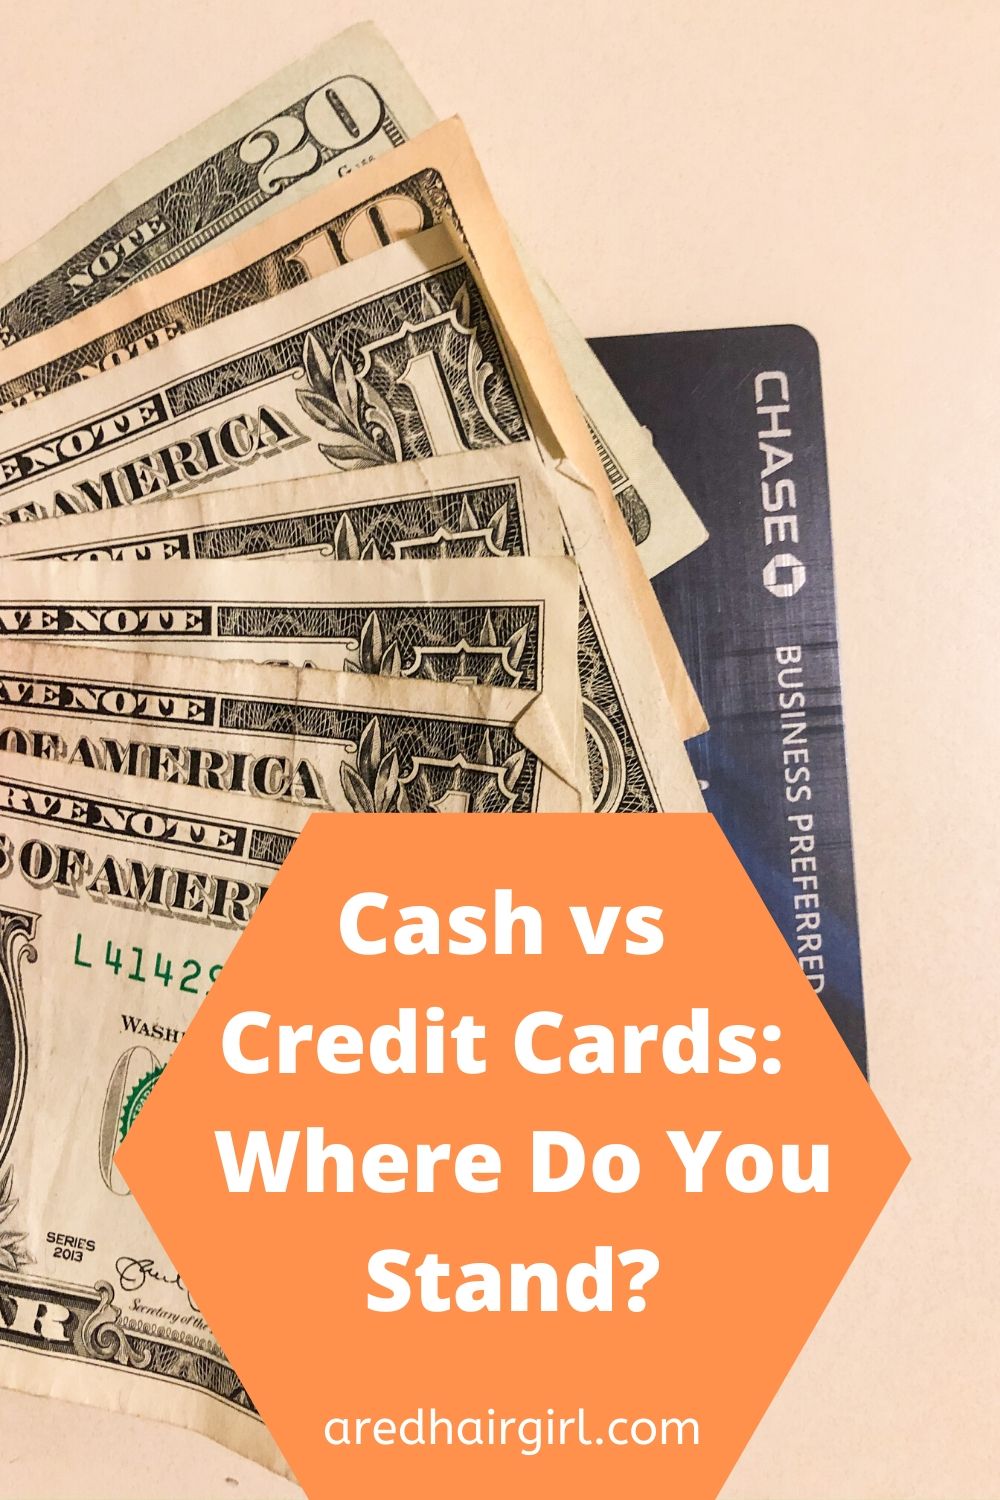 Cash vs Credit Card